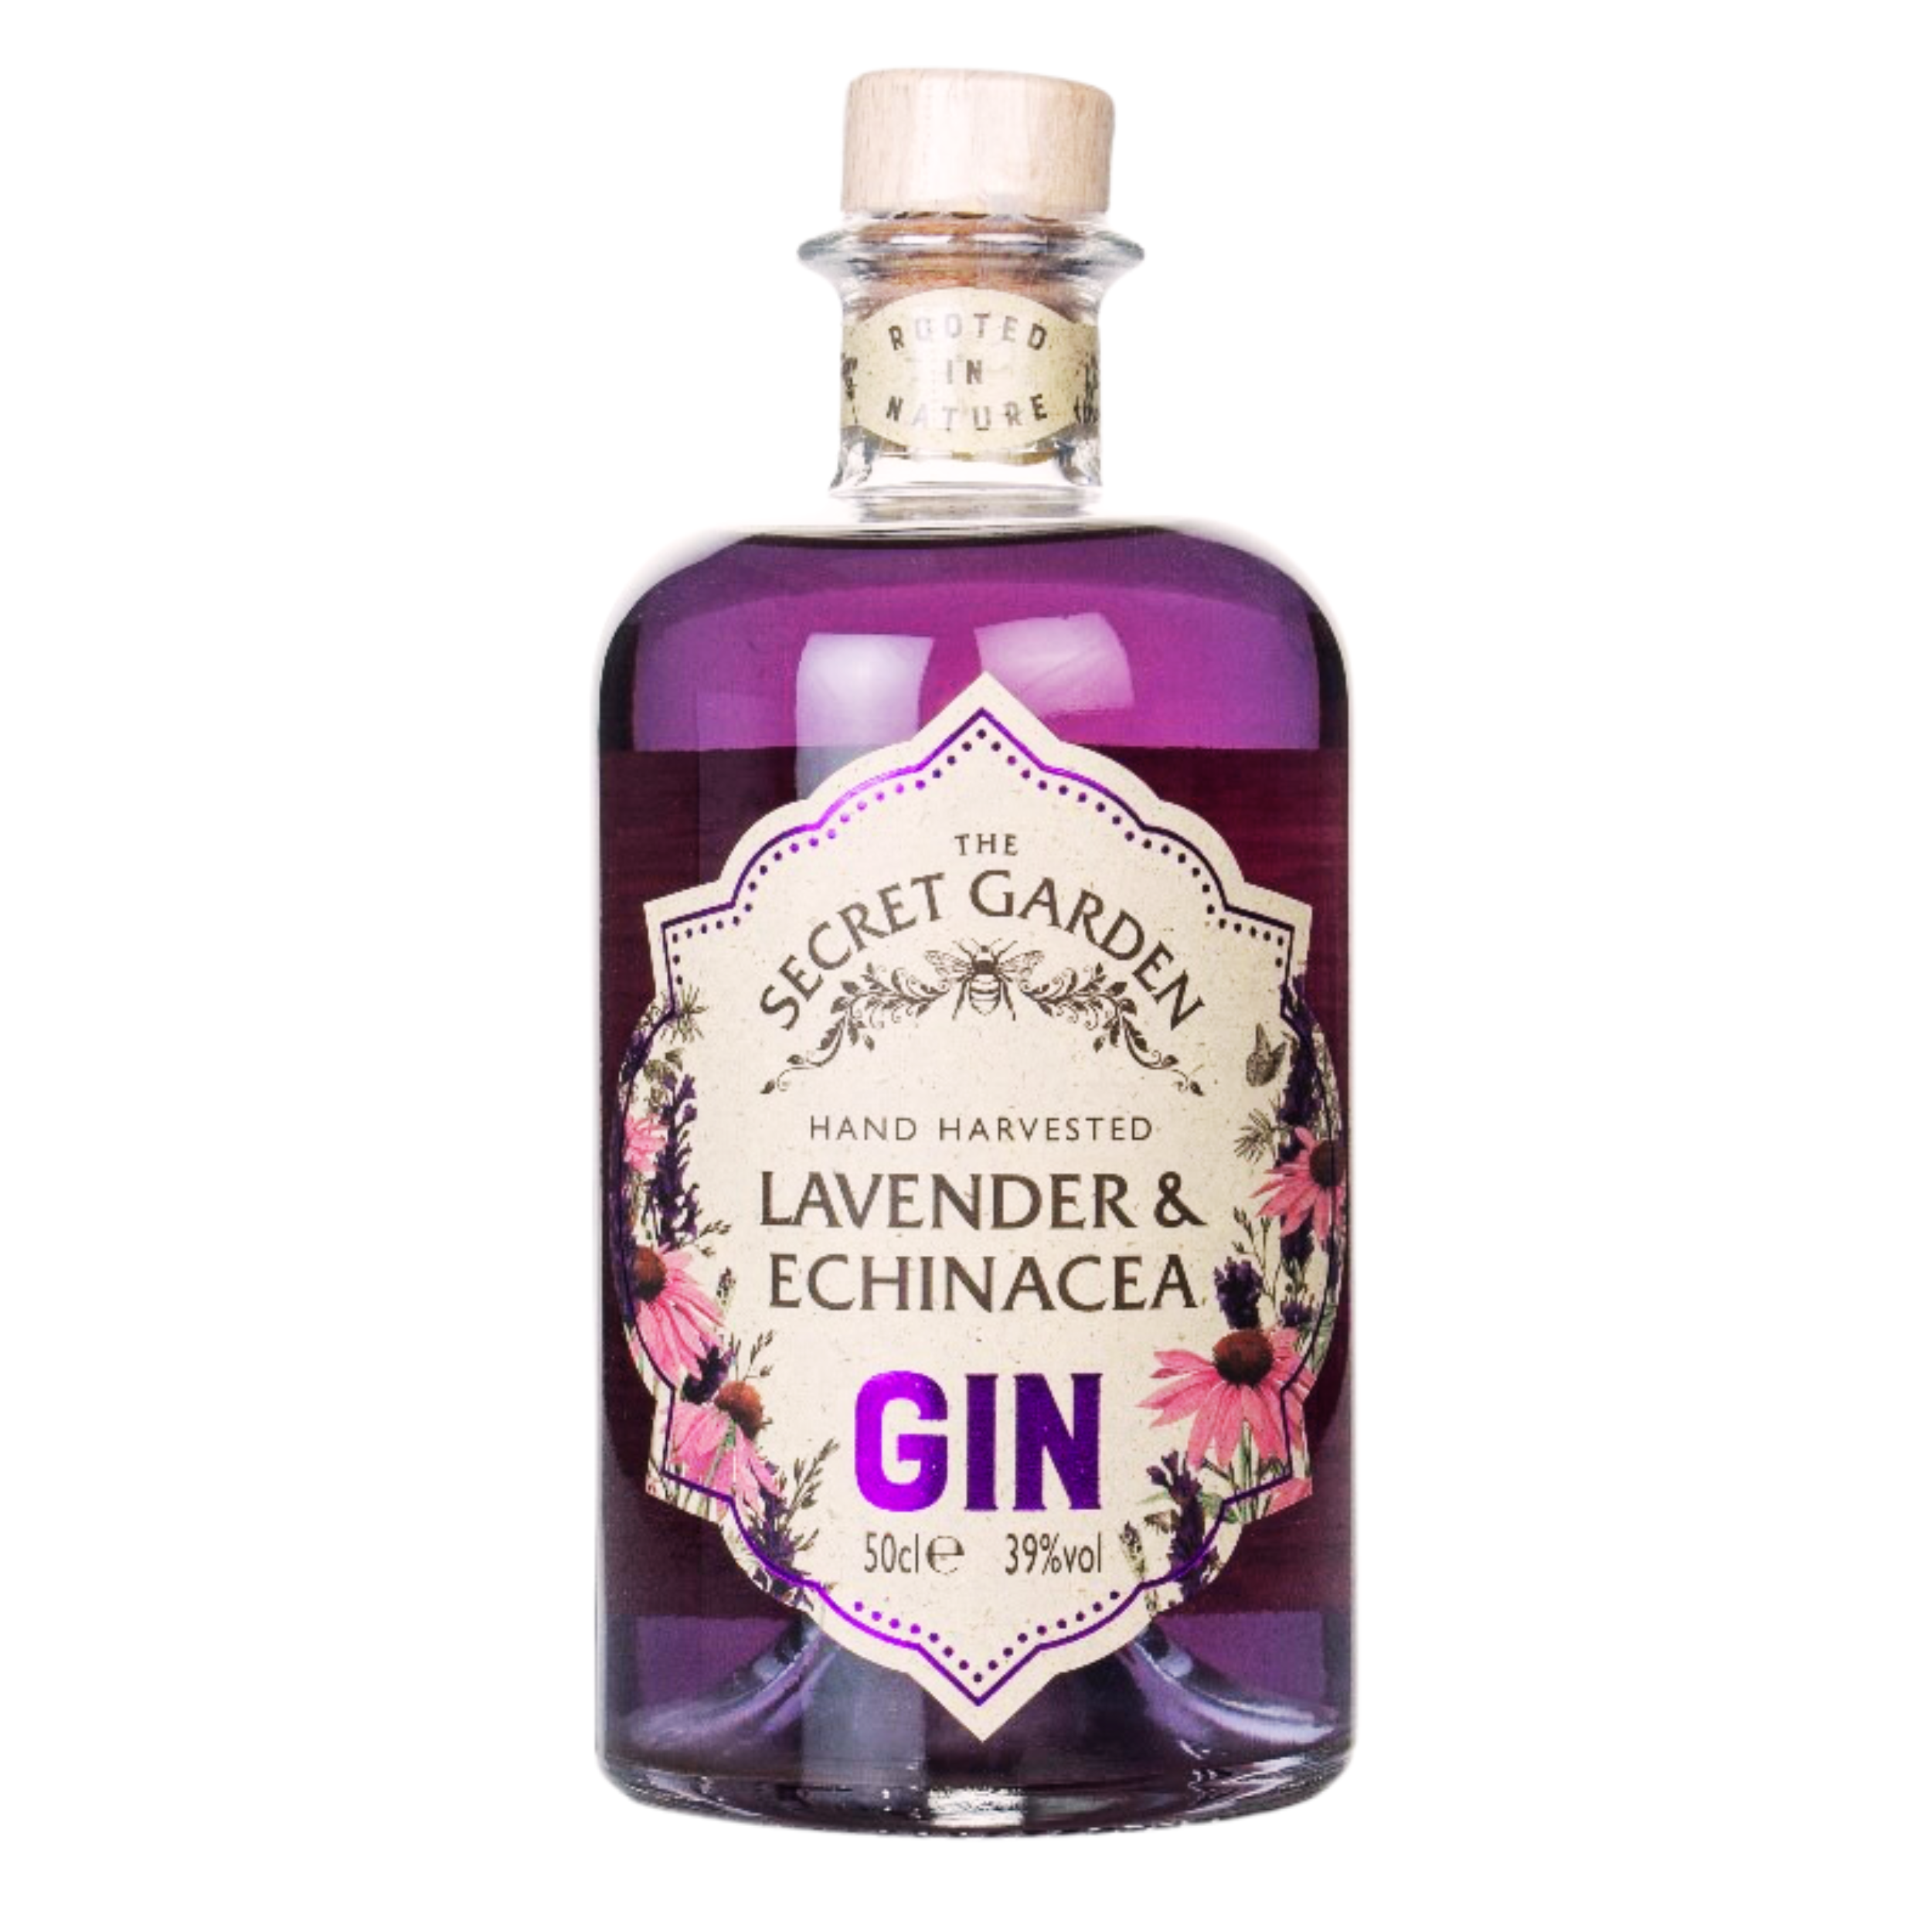 Lavender & Echinacea Gin - The Secret Garden Distillery - 39° - 50cl